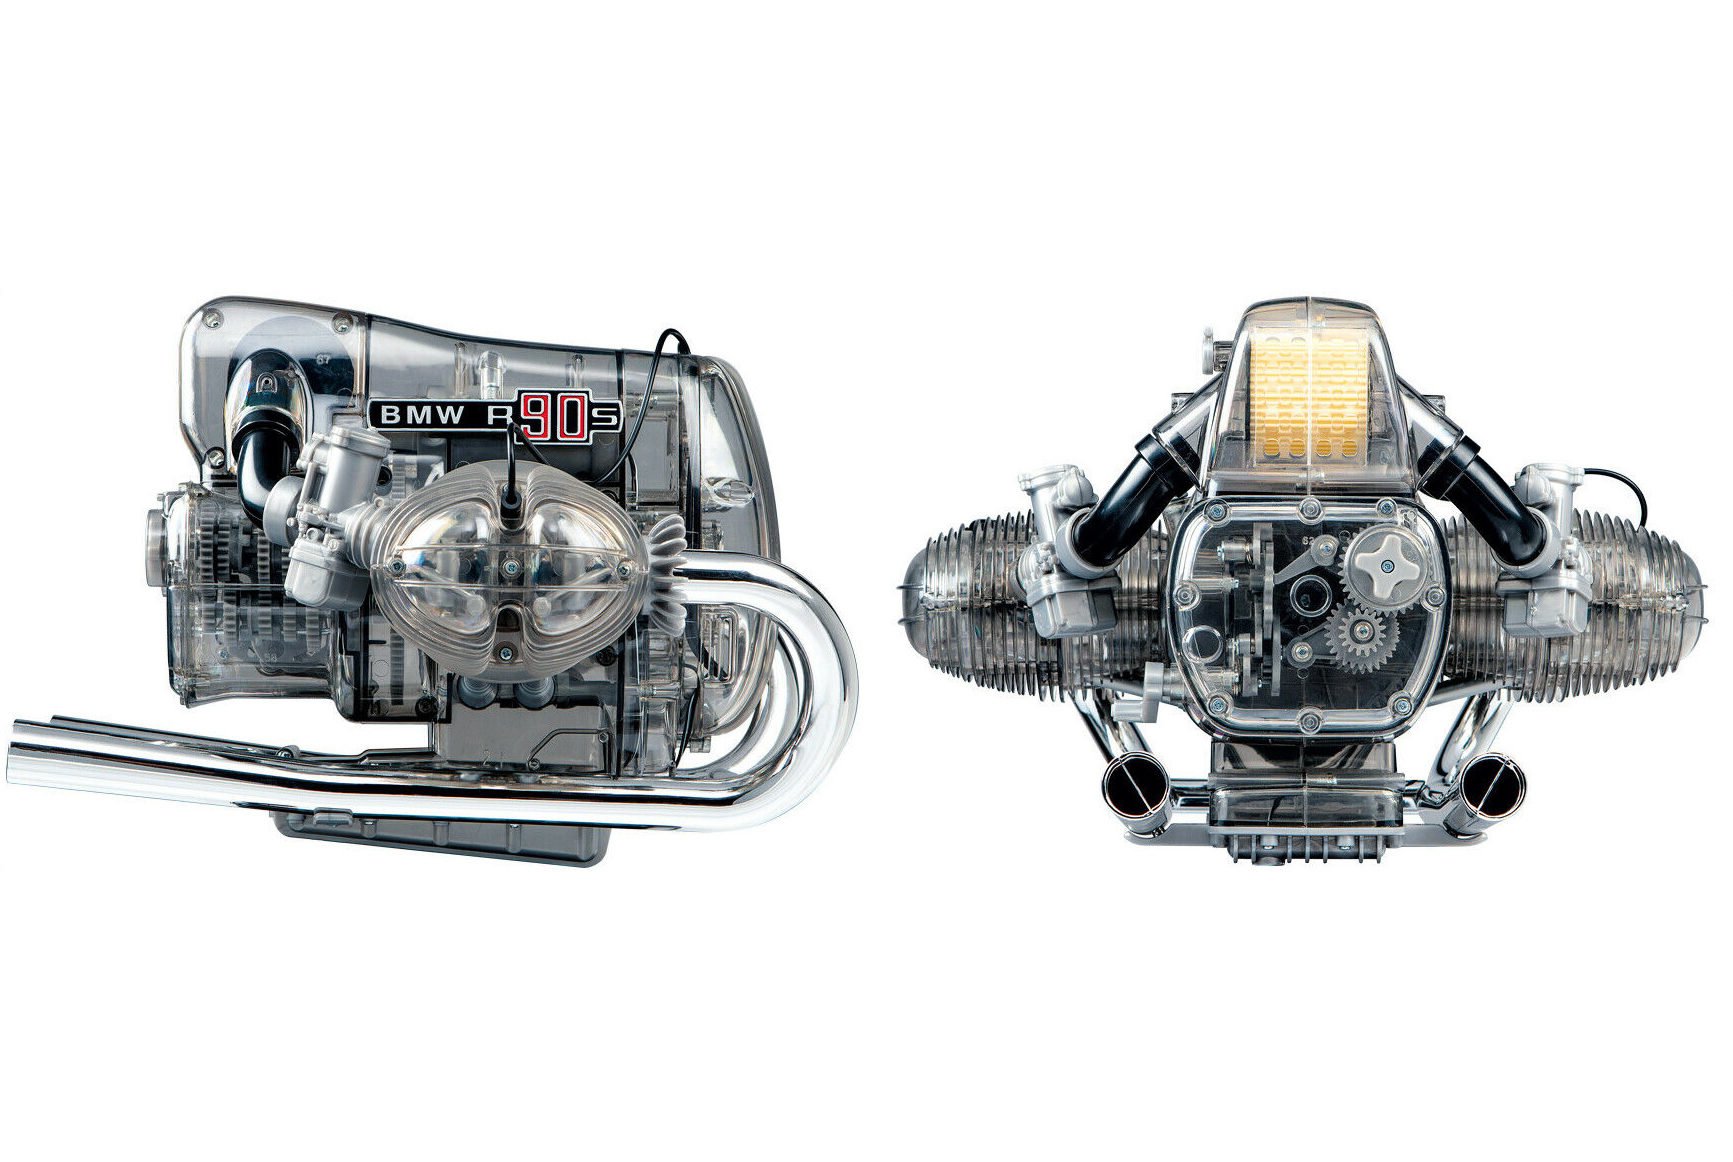 BMW R90S Flat Twin Airhead Engine Model Kit Side